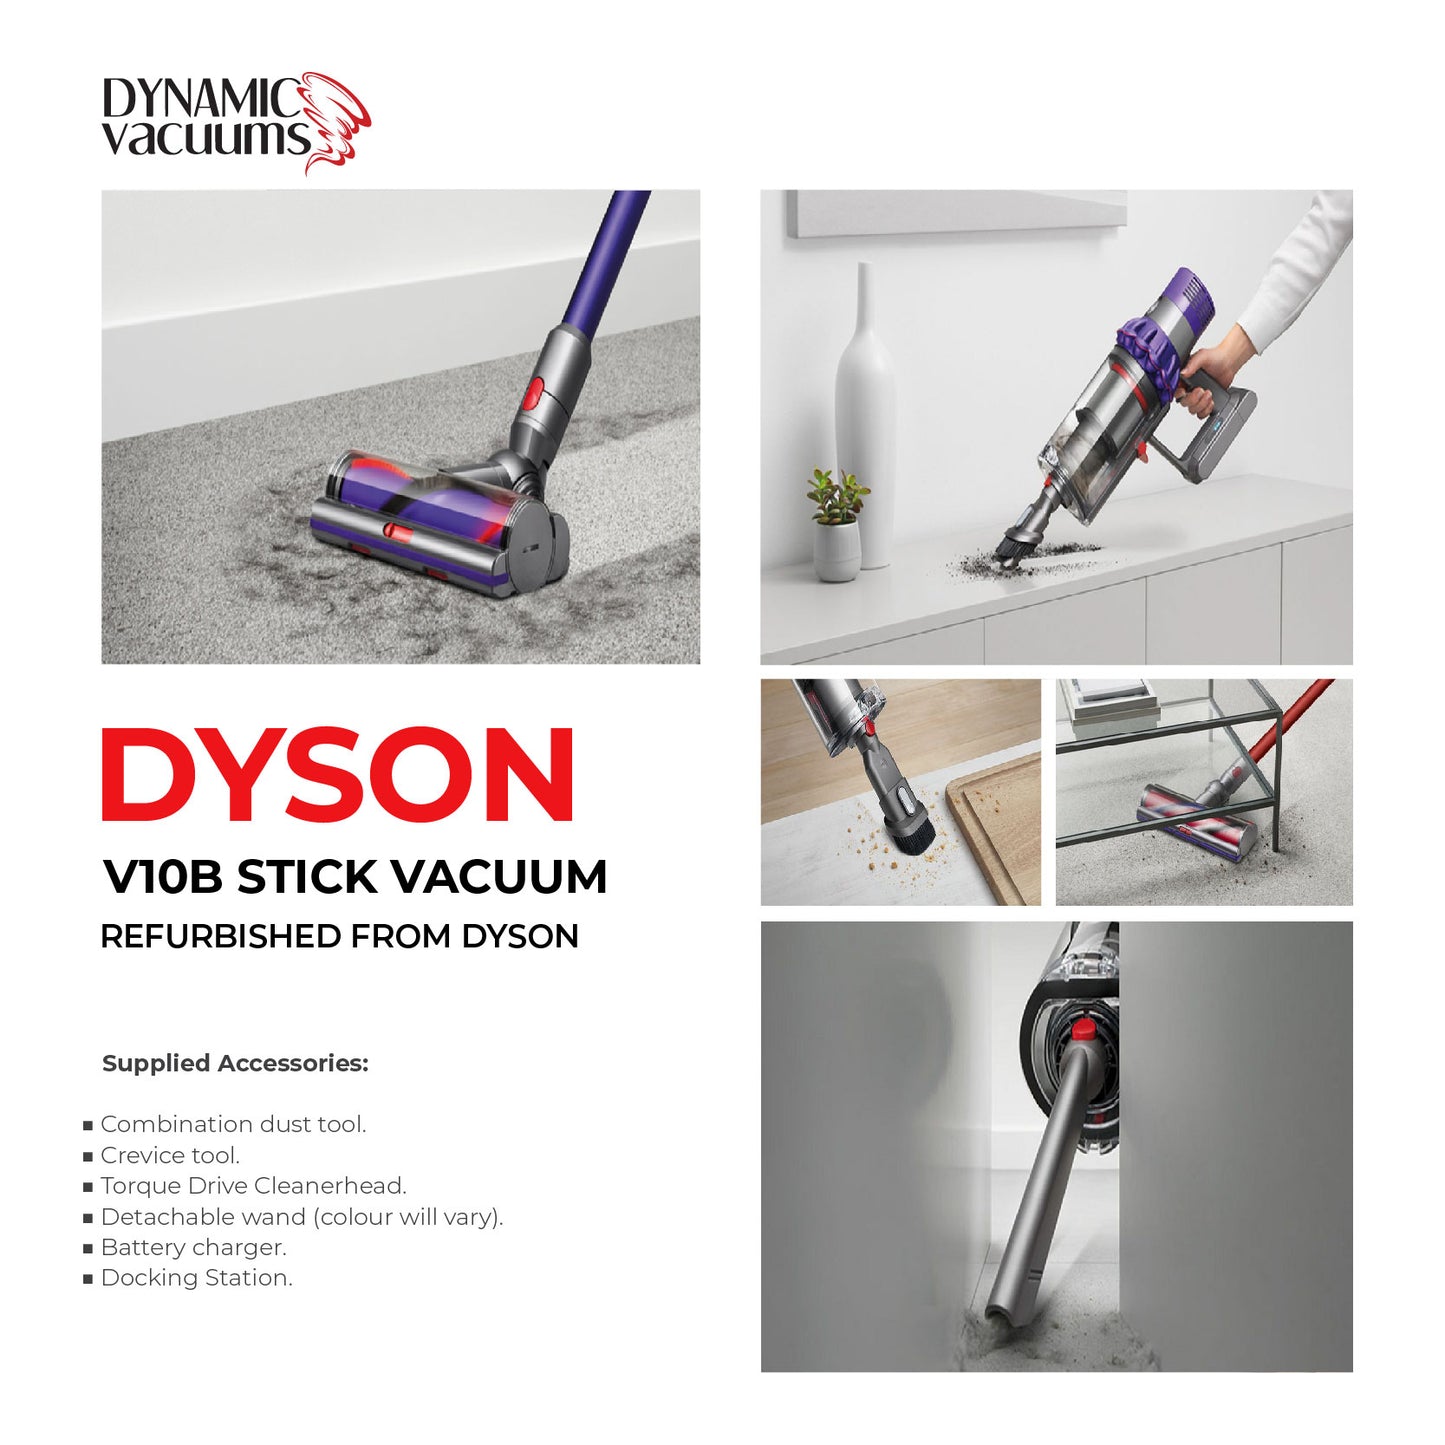 Dyson V10B Stick Vacuum - Refurbished From Dyson